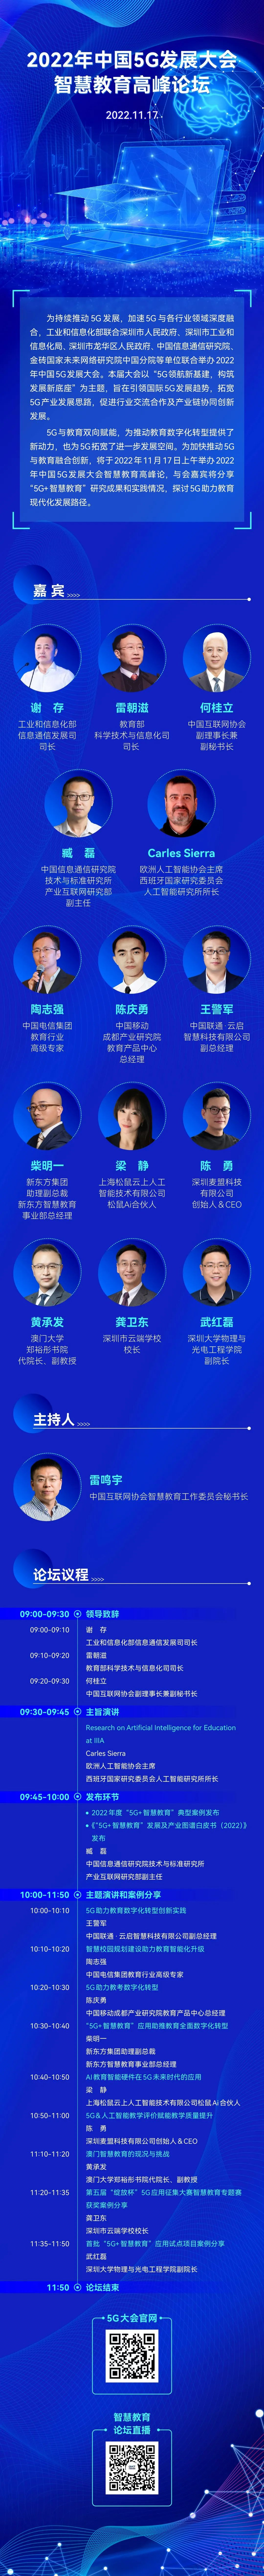 “5G赋能 育见未来”2022年中国5G发展大会智慧教育高峰论坛17日召开